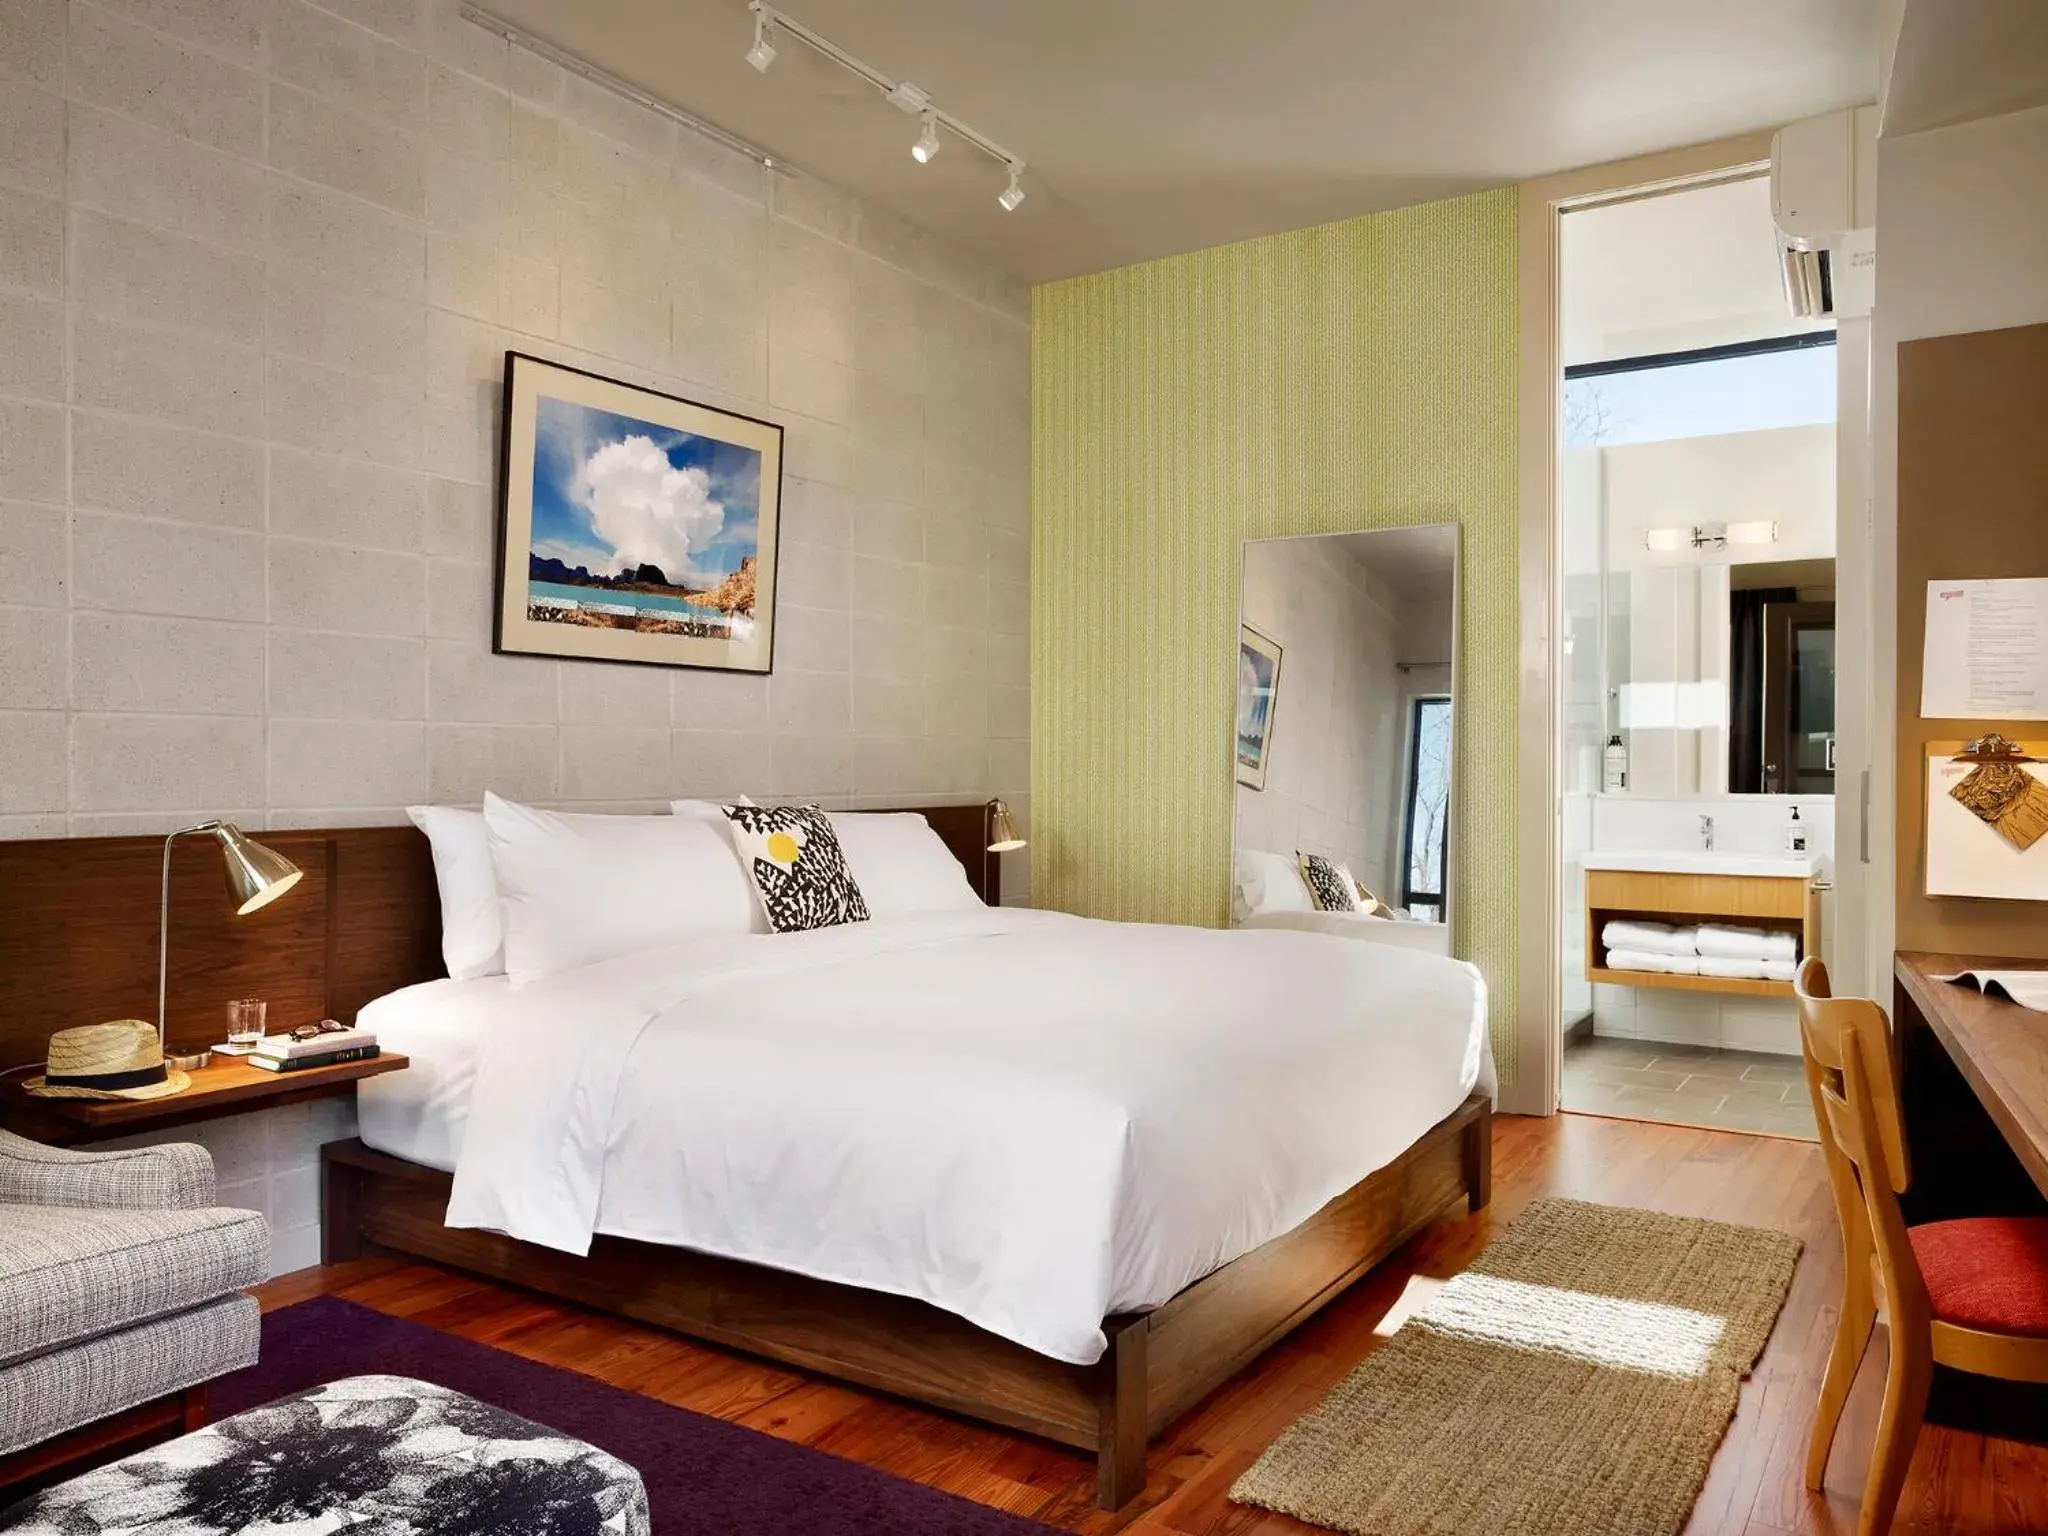 Bed, Room Photo in Heywood Hotel